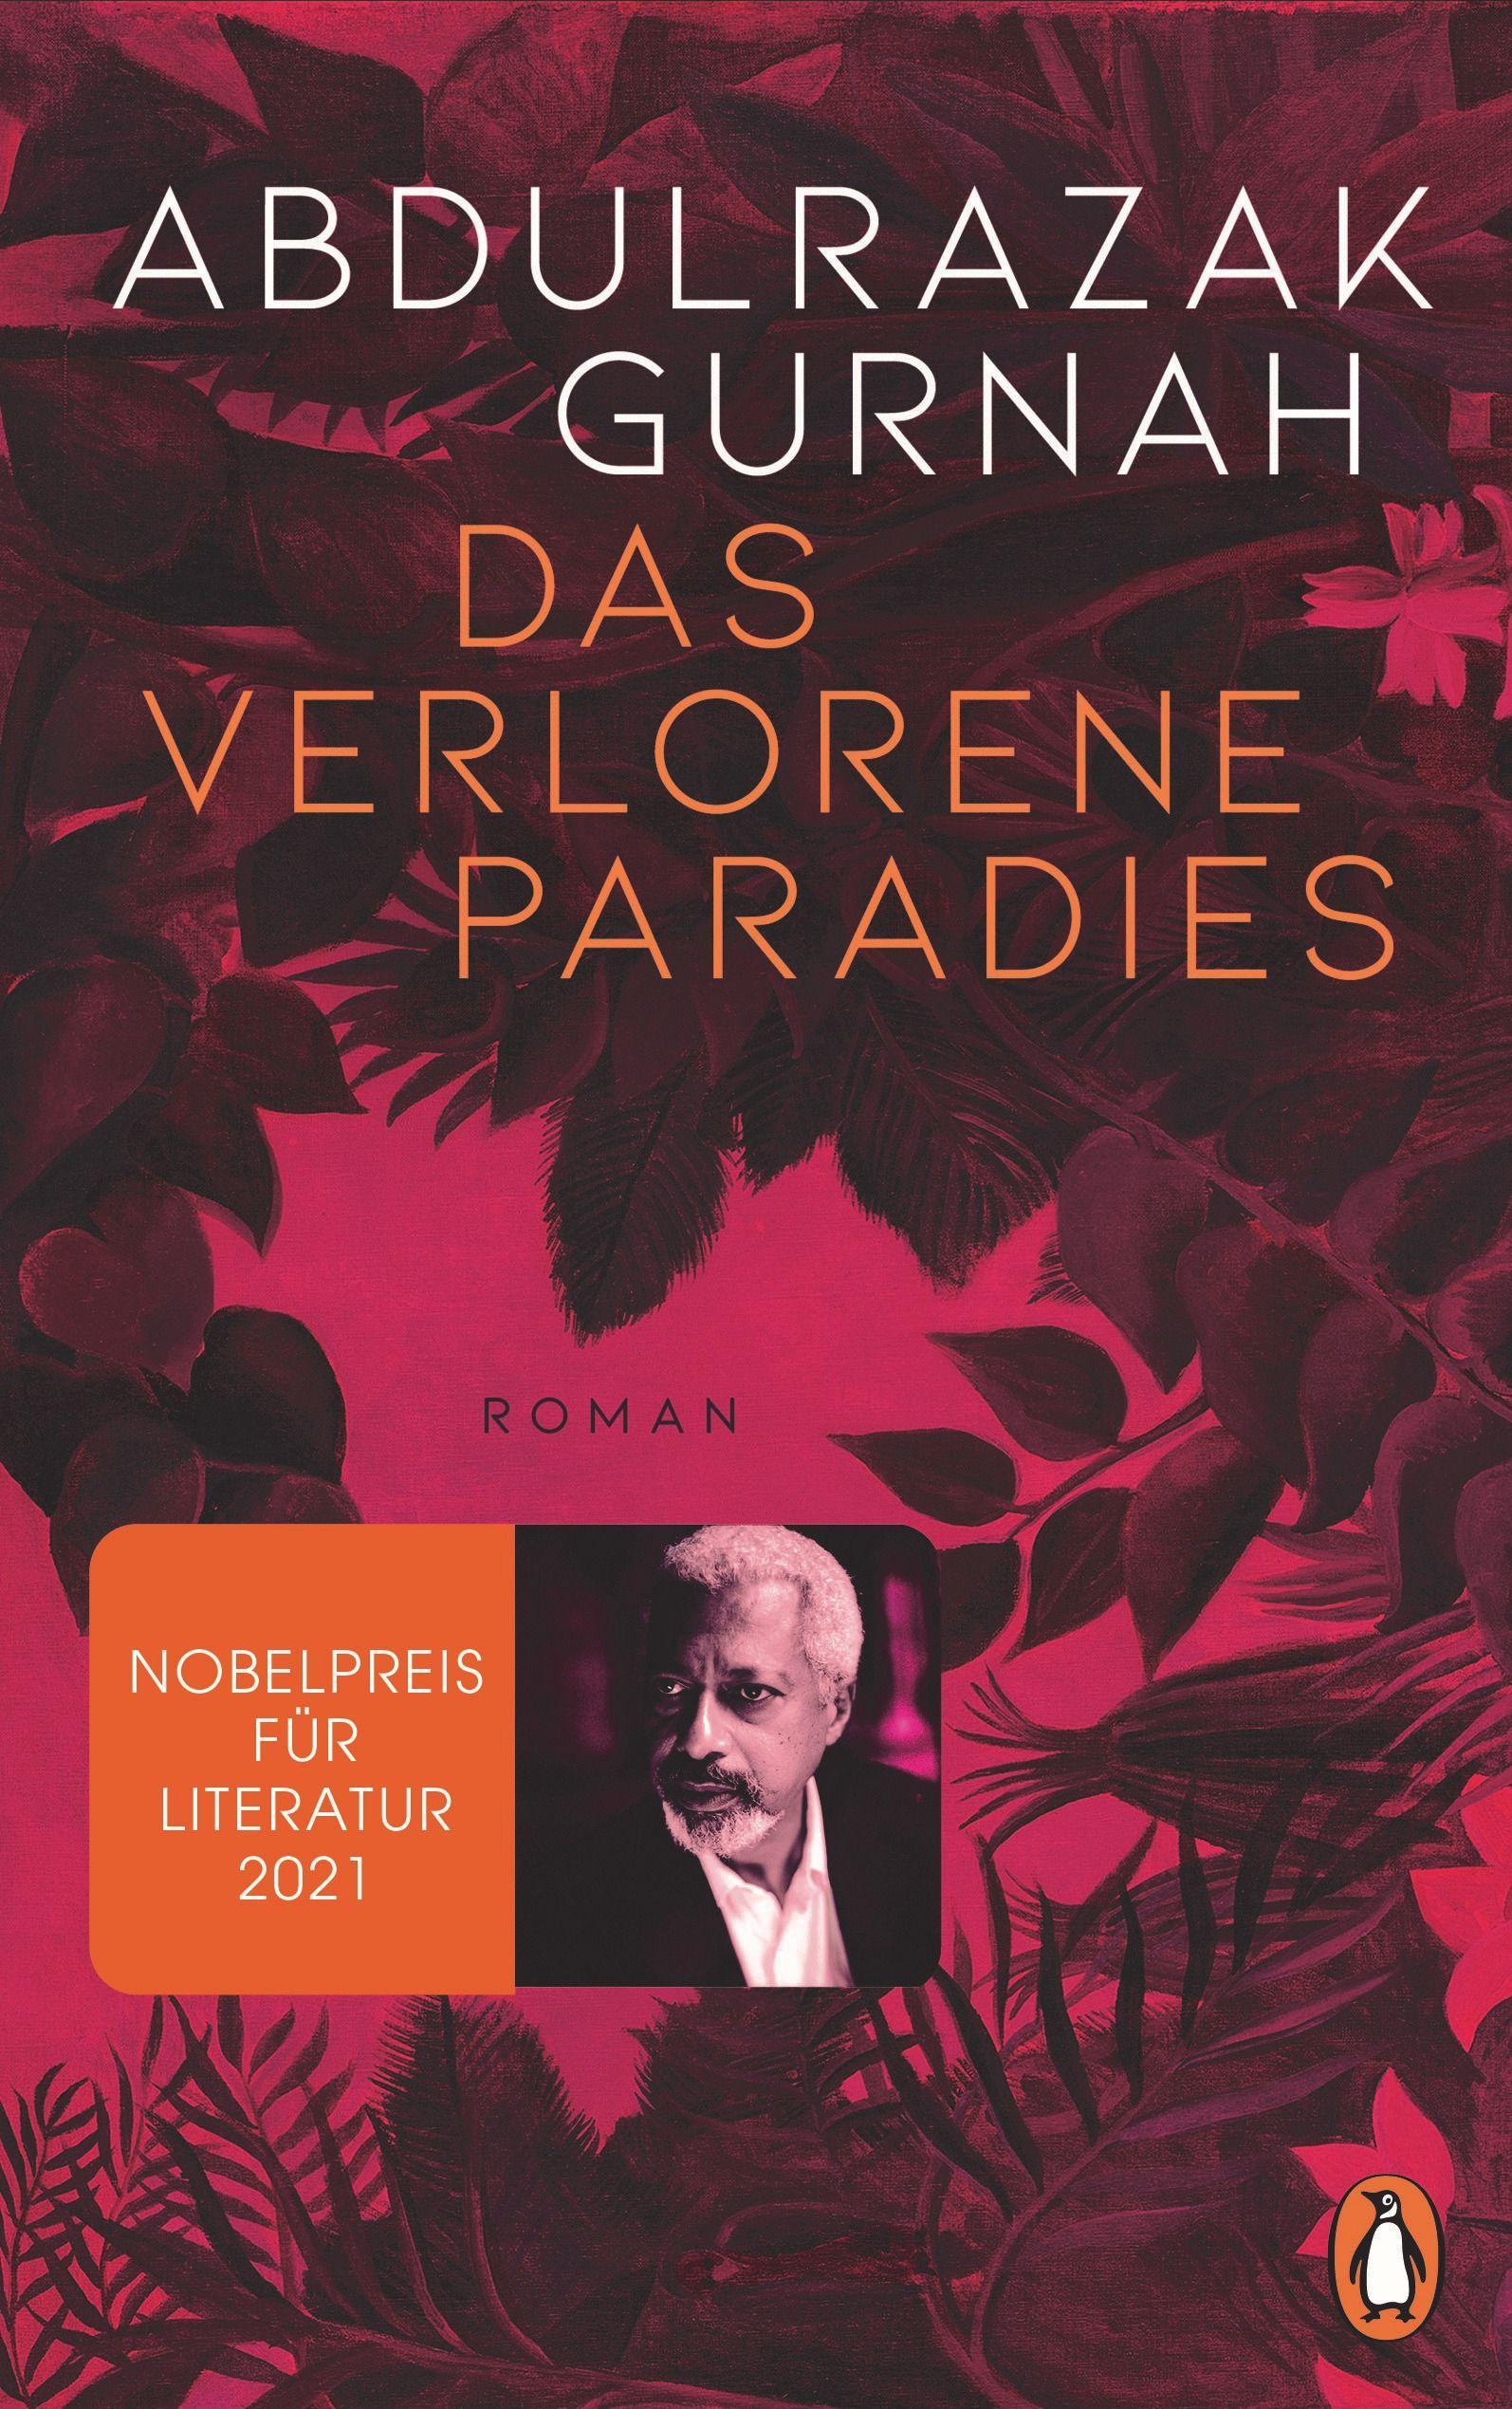 Das verlorene Paradies Roman. Nobelpreis für Literatur 2021